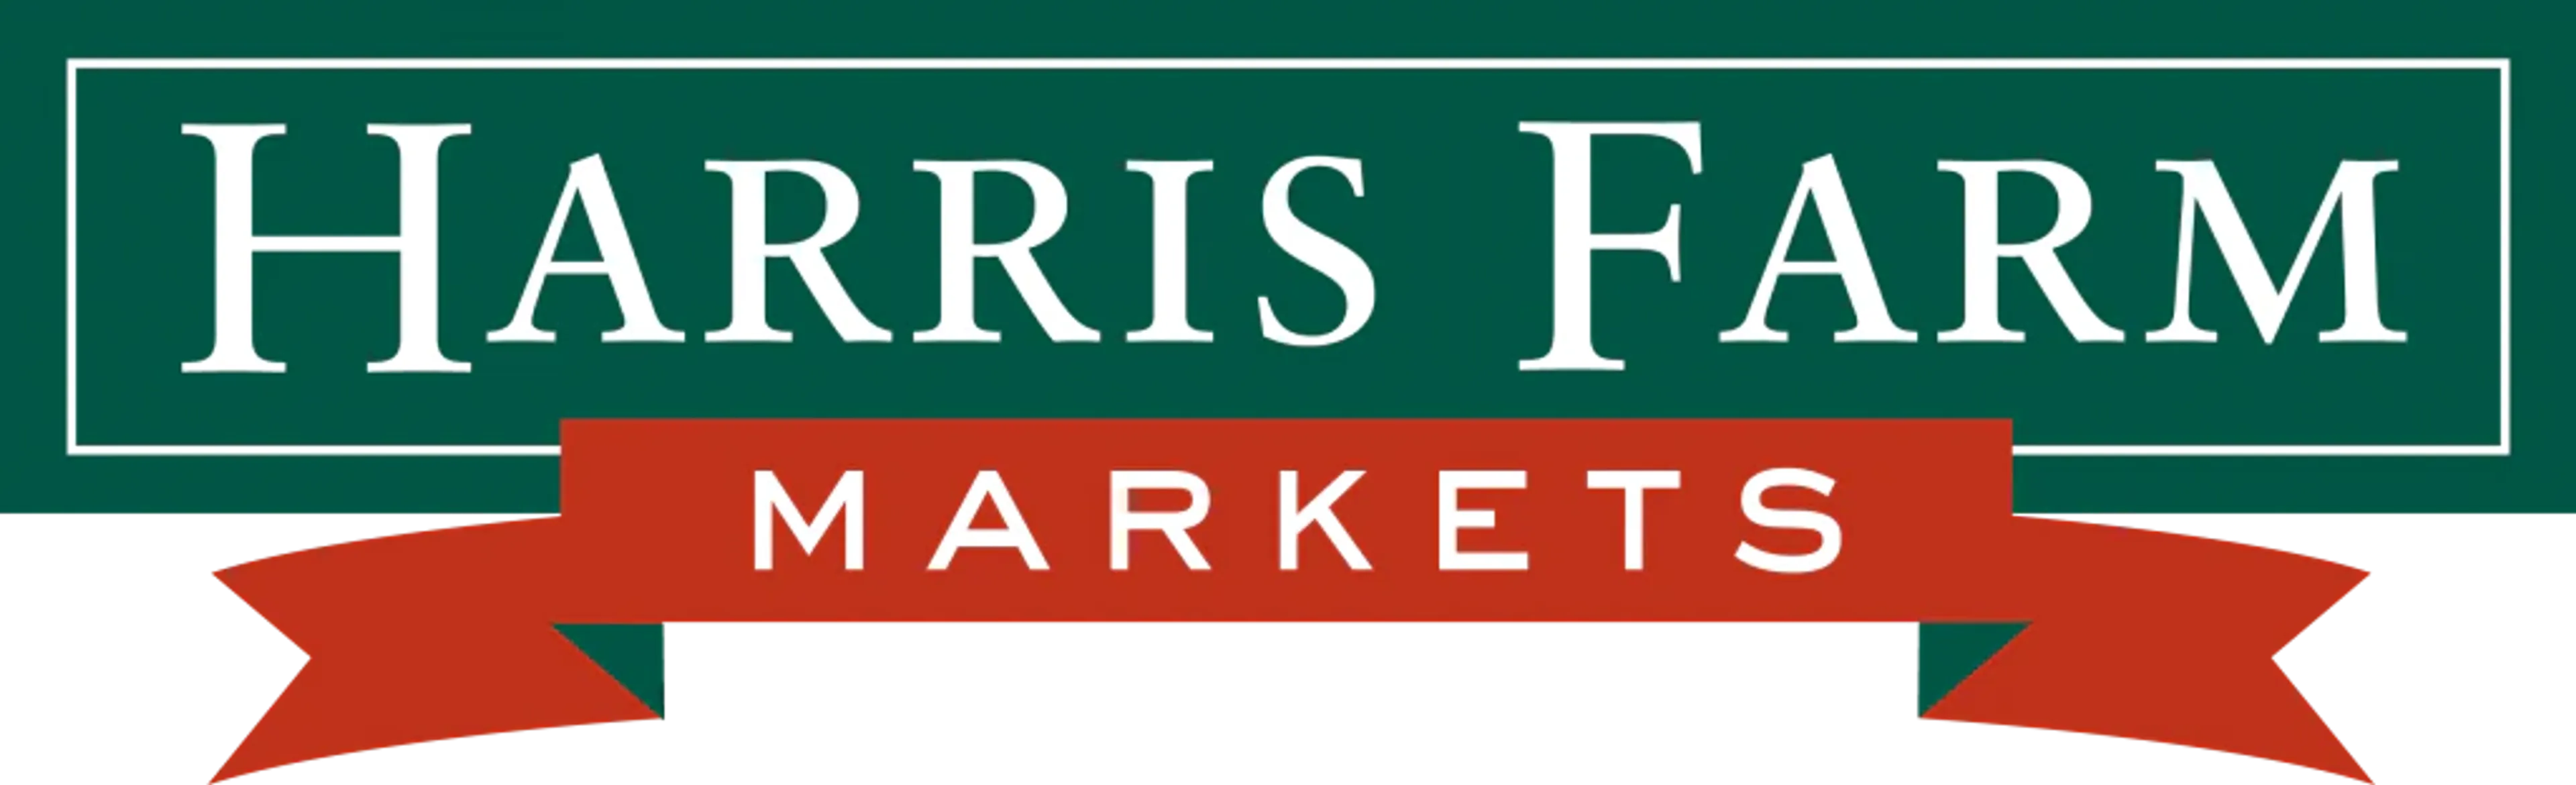 HARRIS FARM MARKETS logo